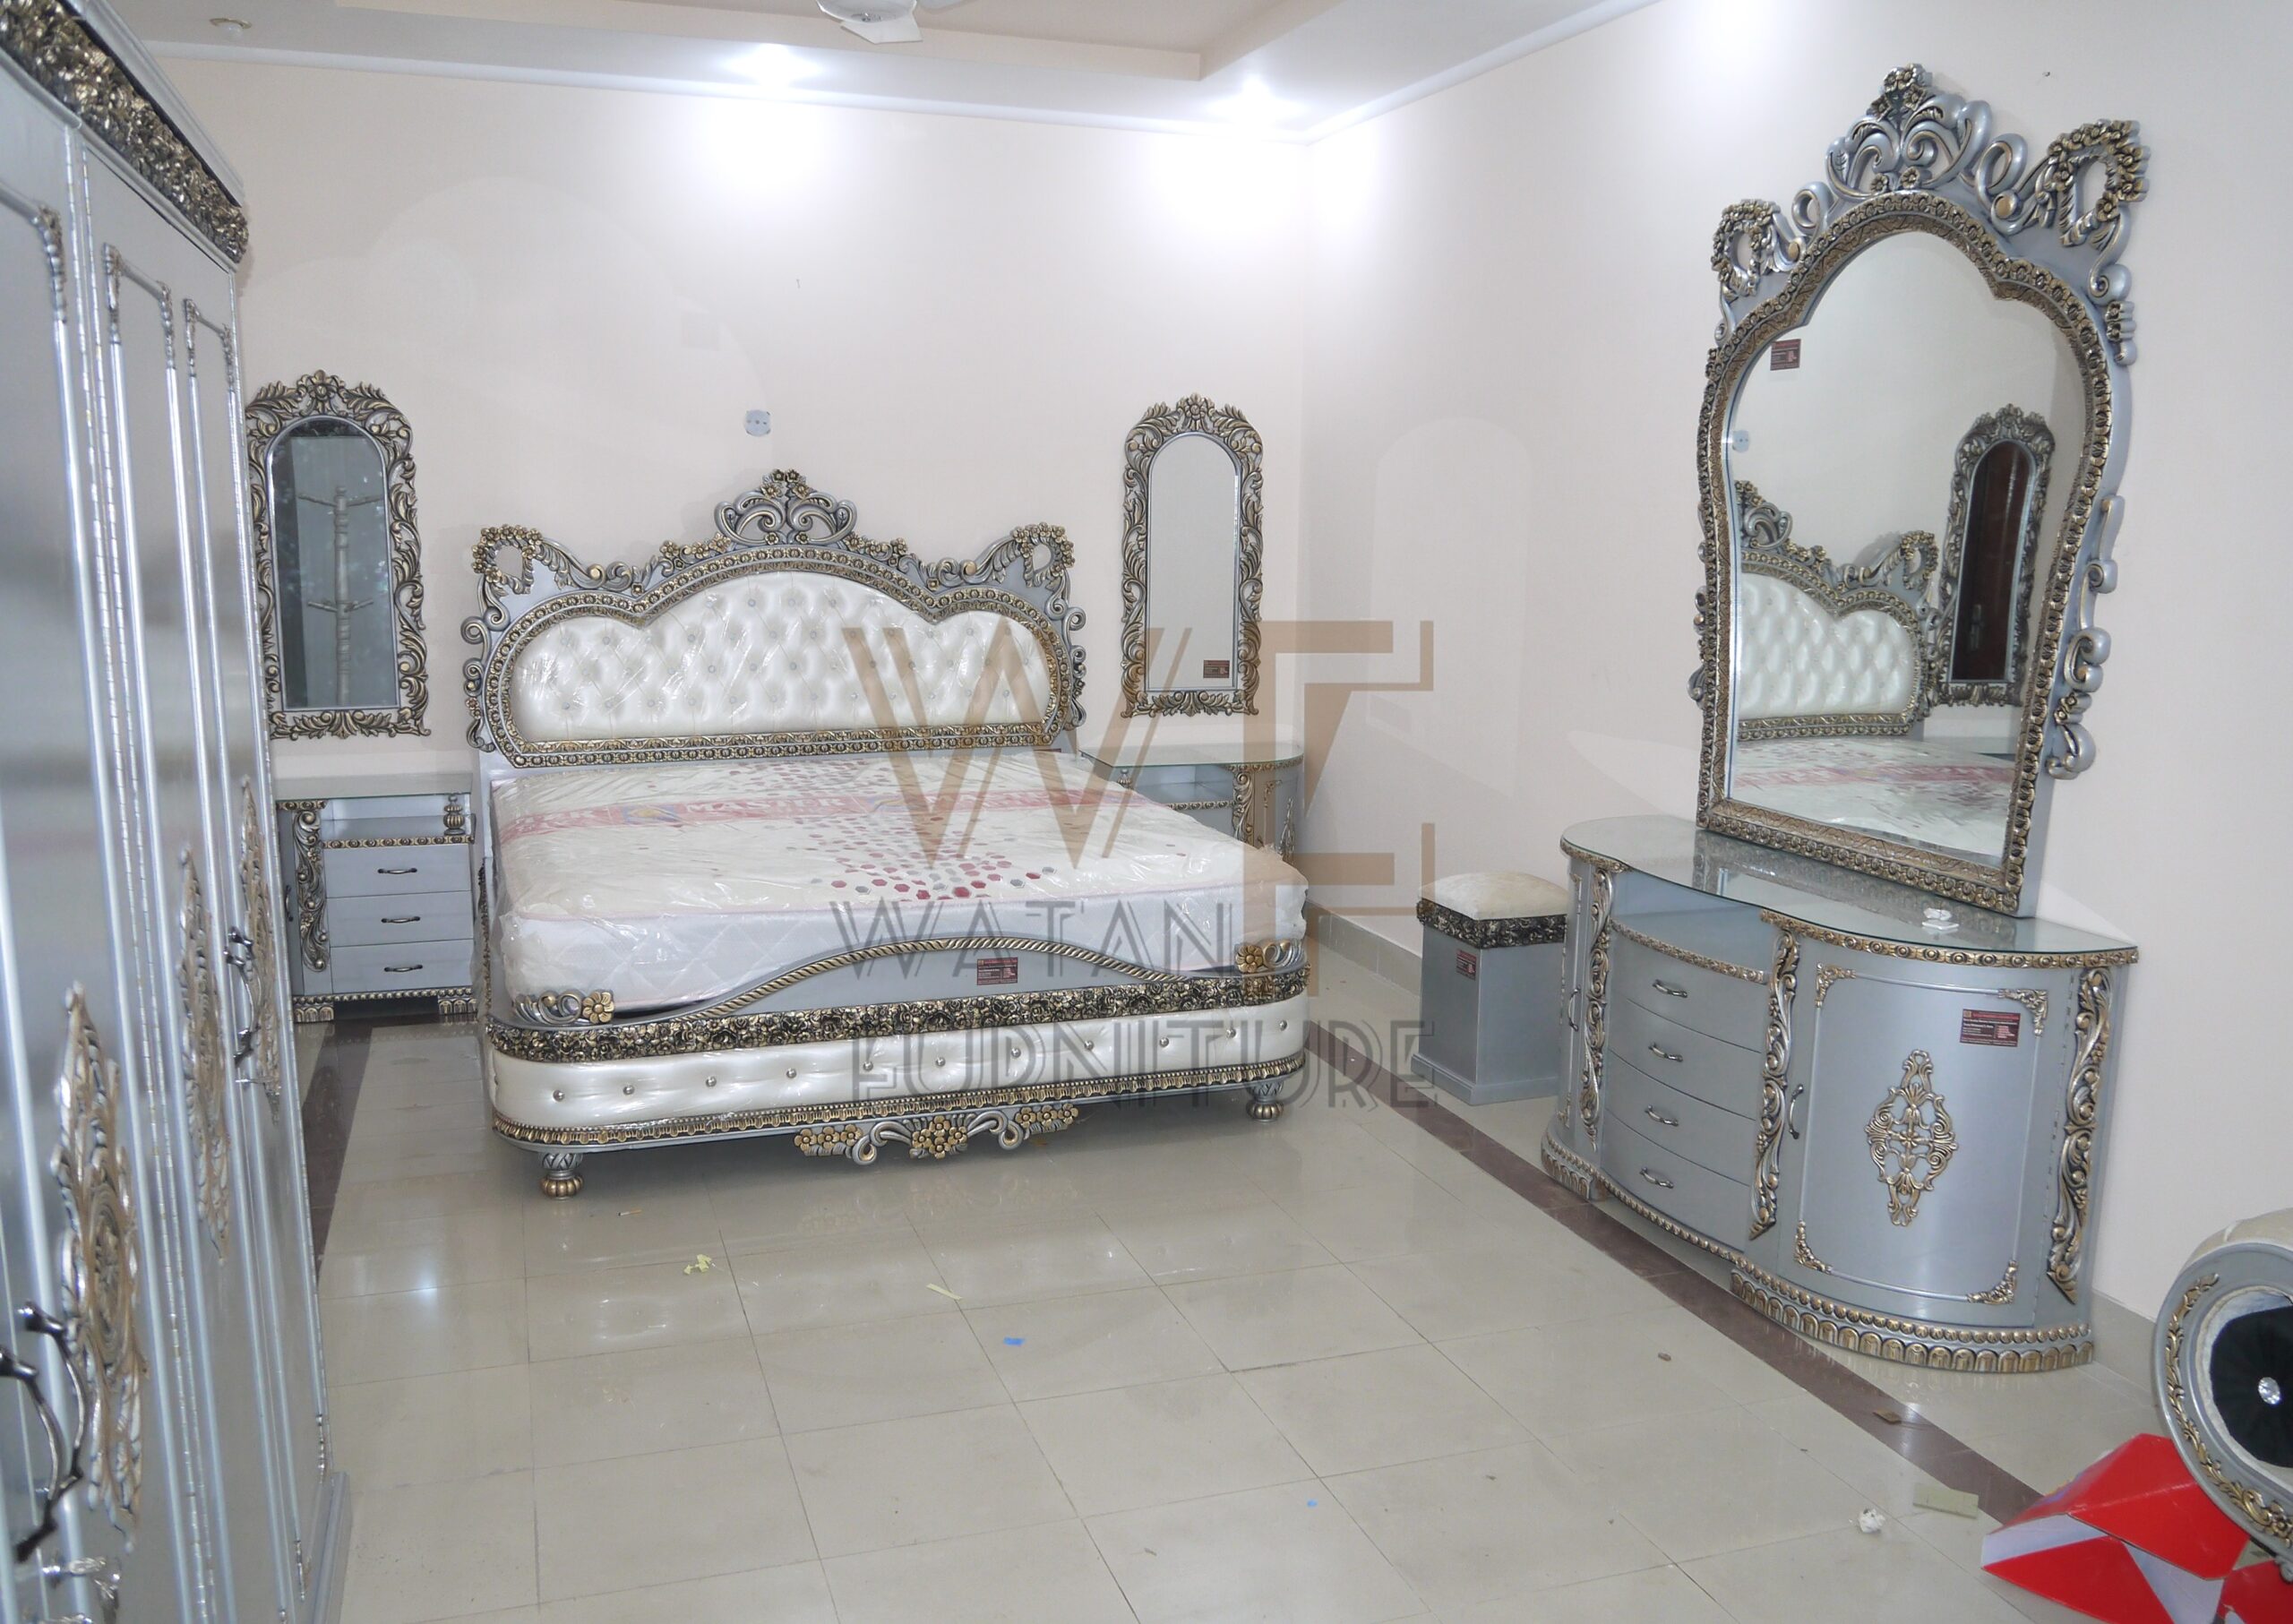 Chiragh Bedset WF-151 - Watan Furnitures Gujrat Best Quality Bed